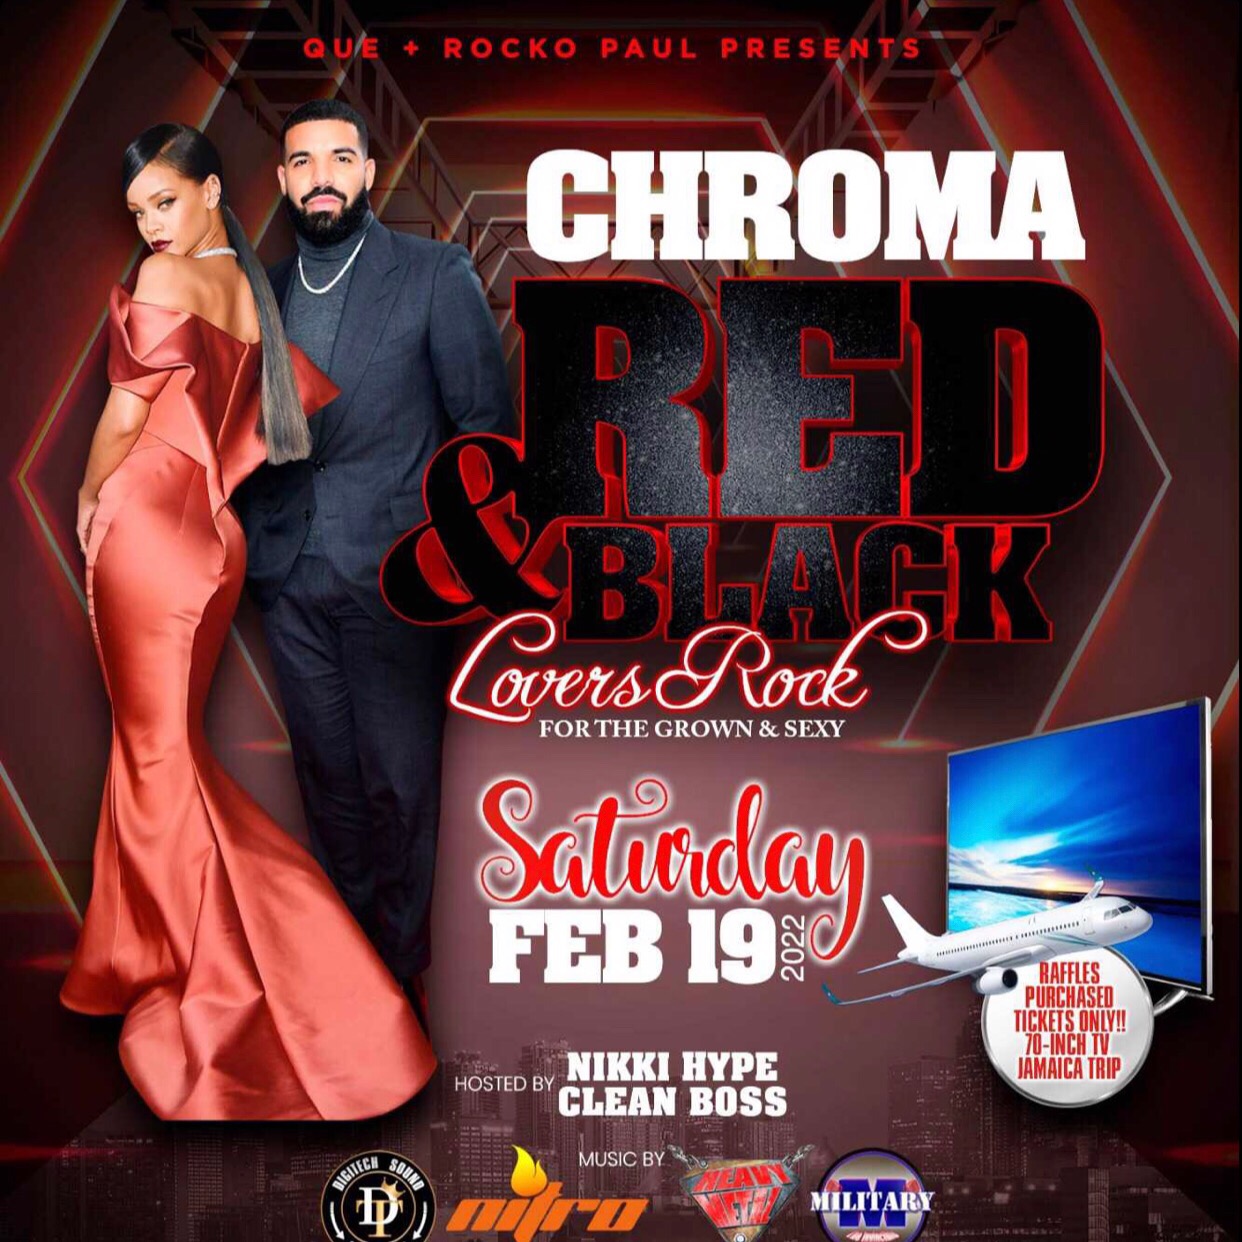 Chroma’s Red & Black